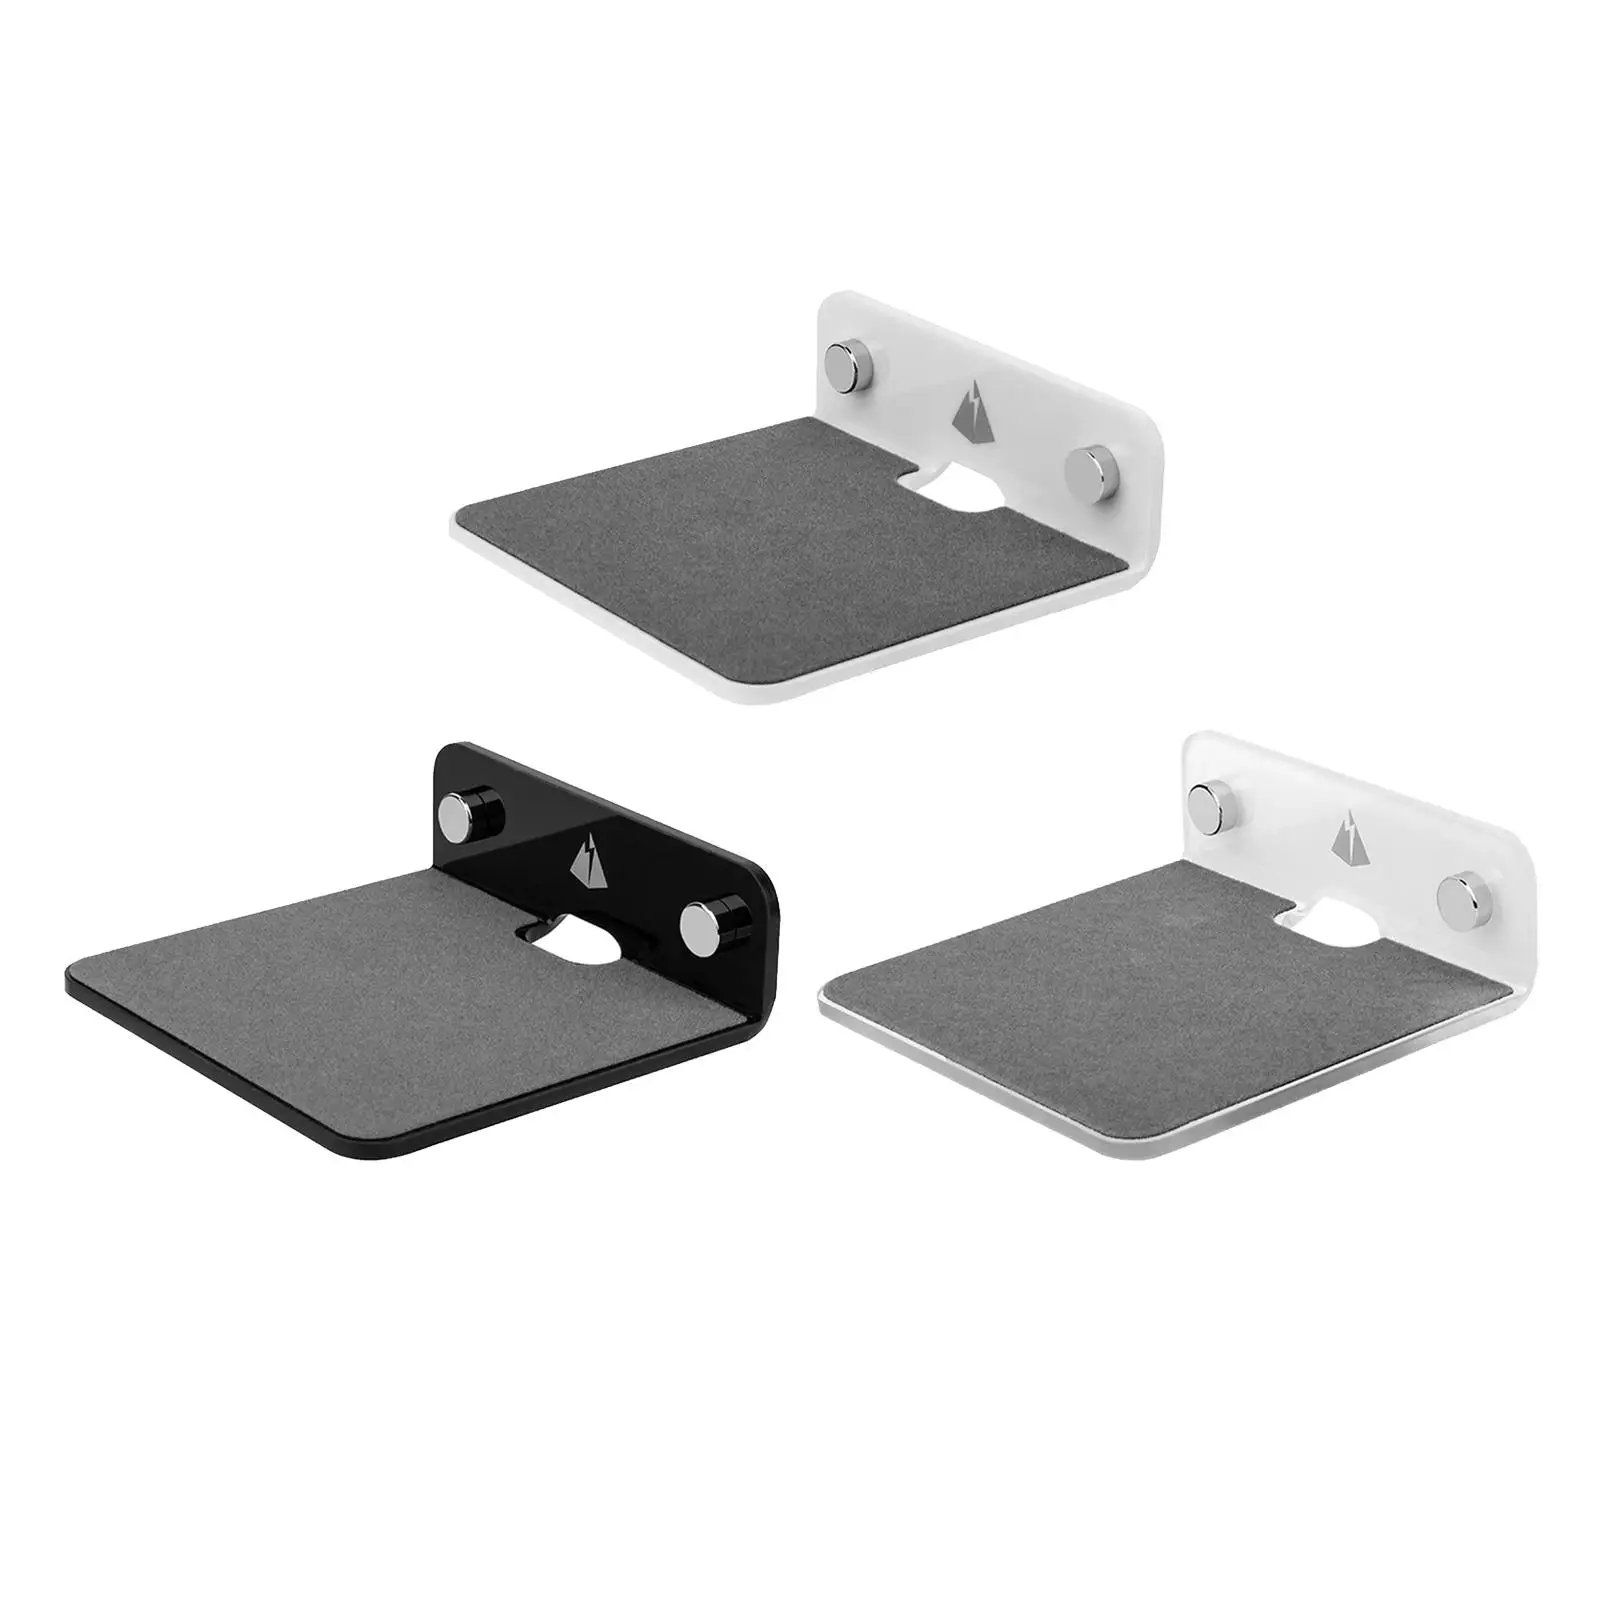 Sound Bars Holder Holder Accessories Shelf Small Universal for Sound Bars Speakers